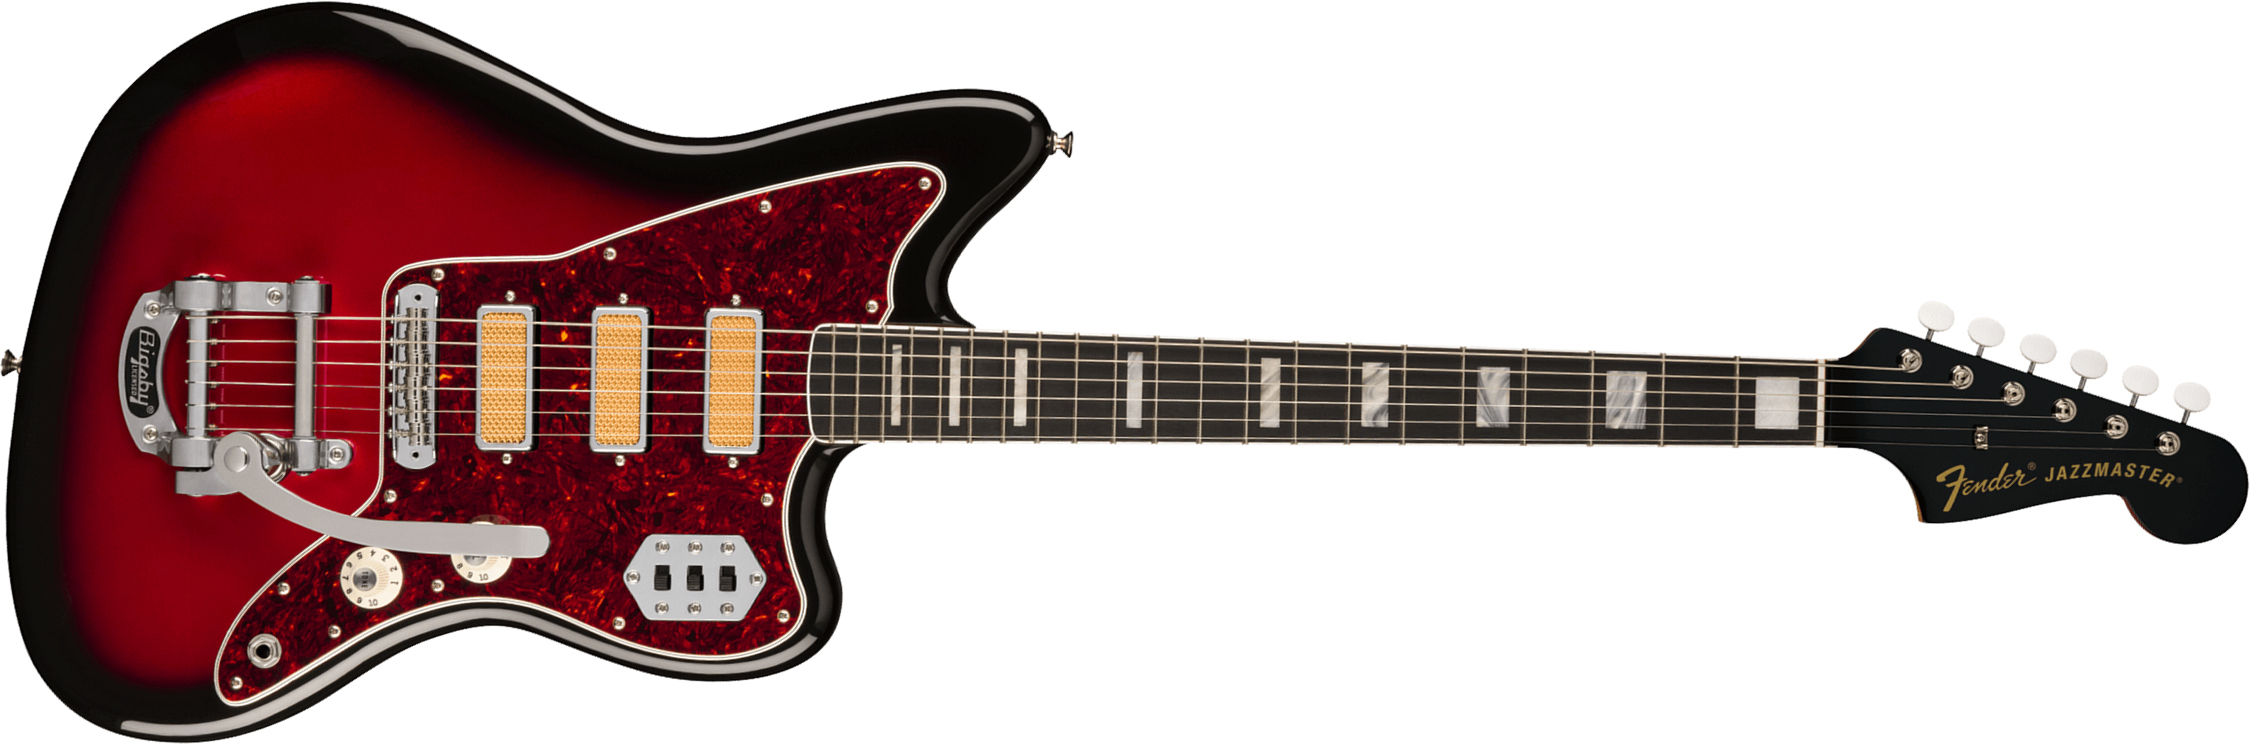 Fender Jazzmaster Gold Foil Ltd Mex 3mh Trem Bigsby Eb - Candy Apple Burst - Retro rock electric guitar - Main picture